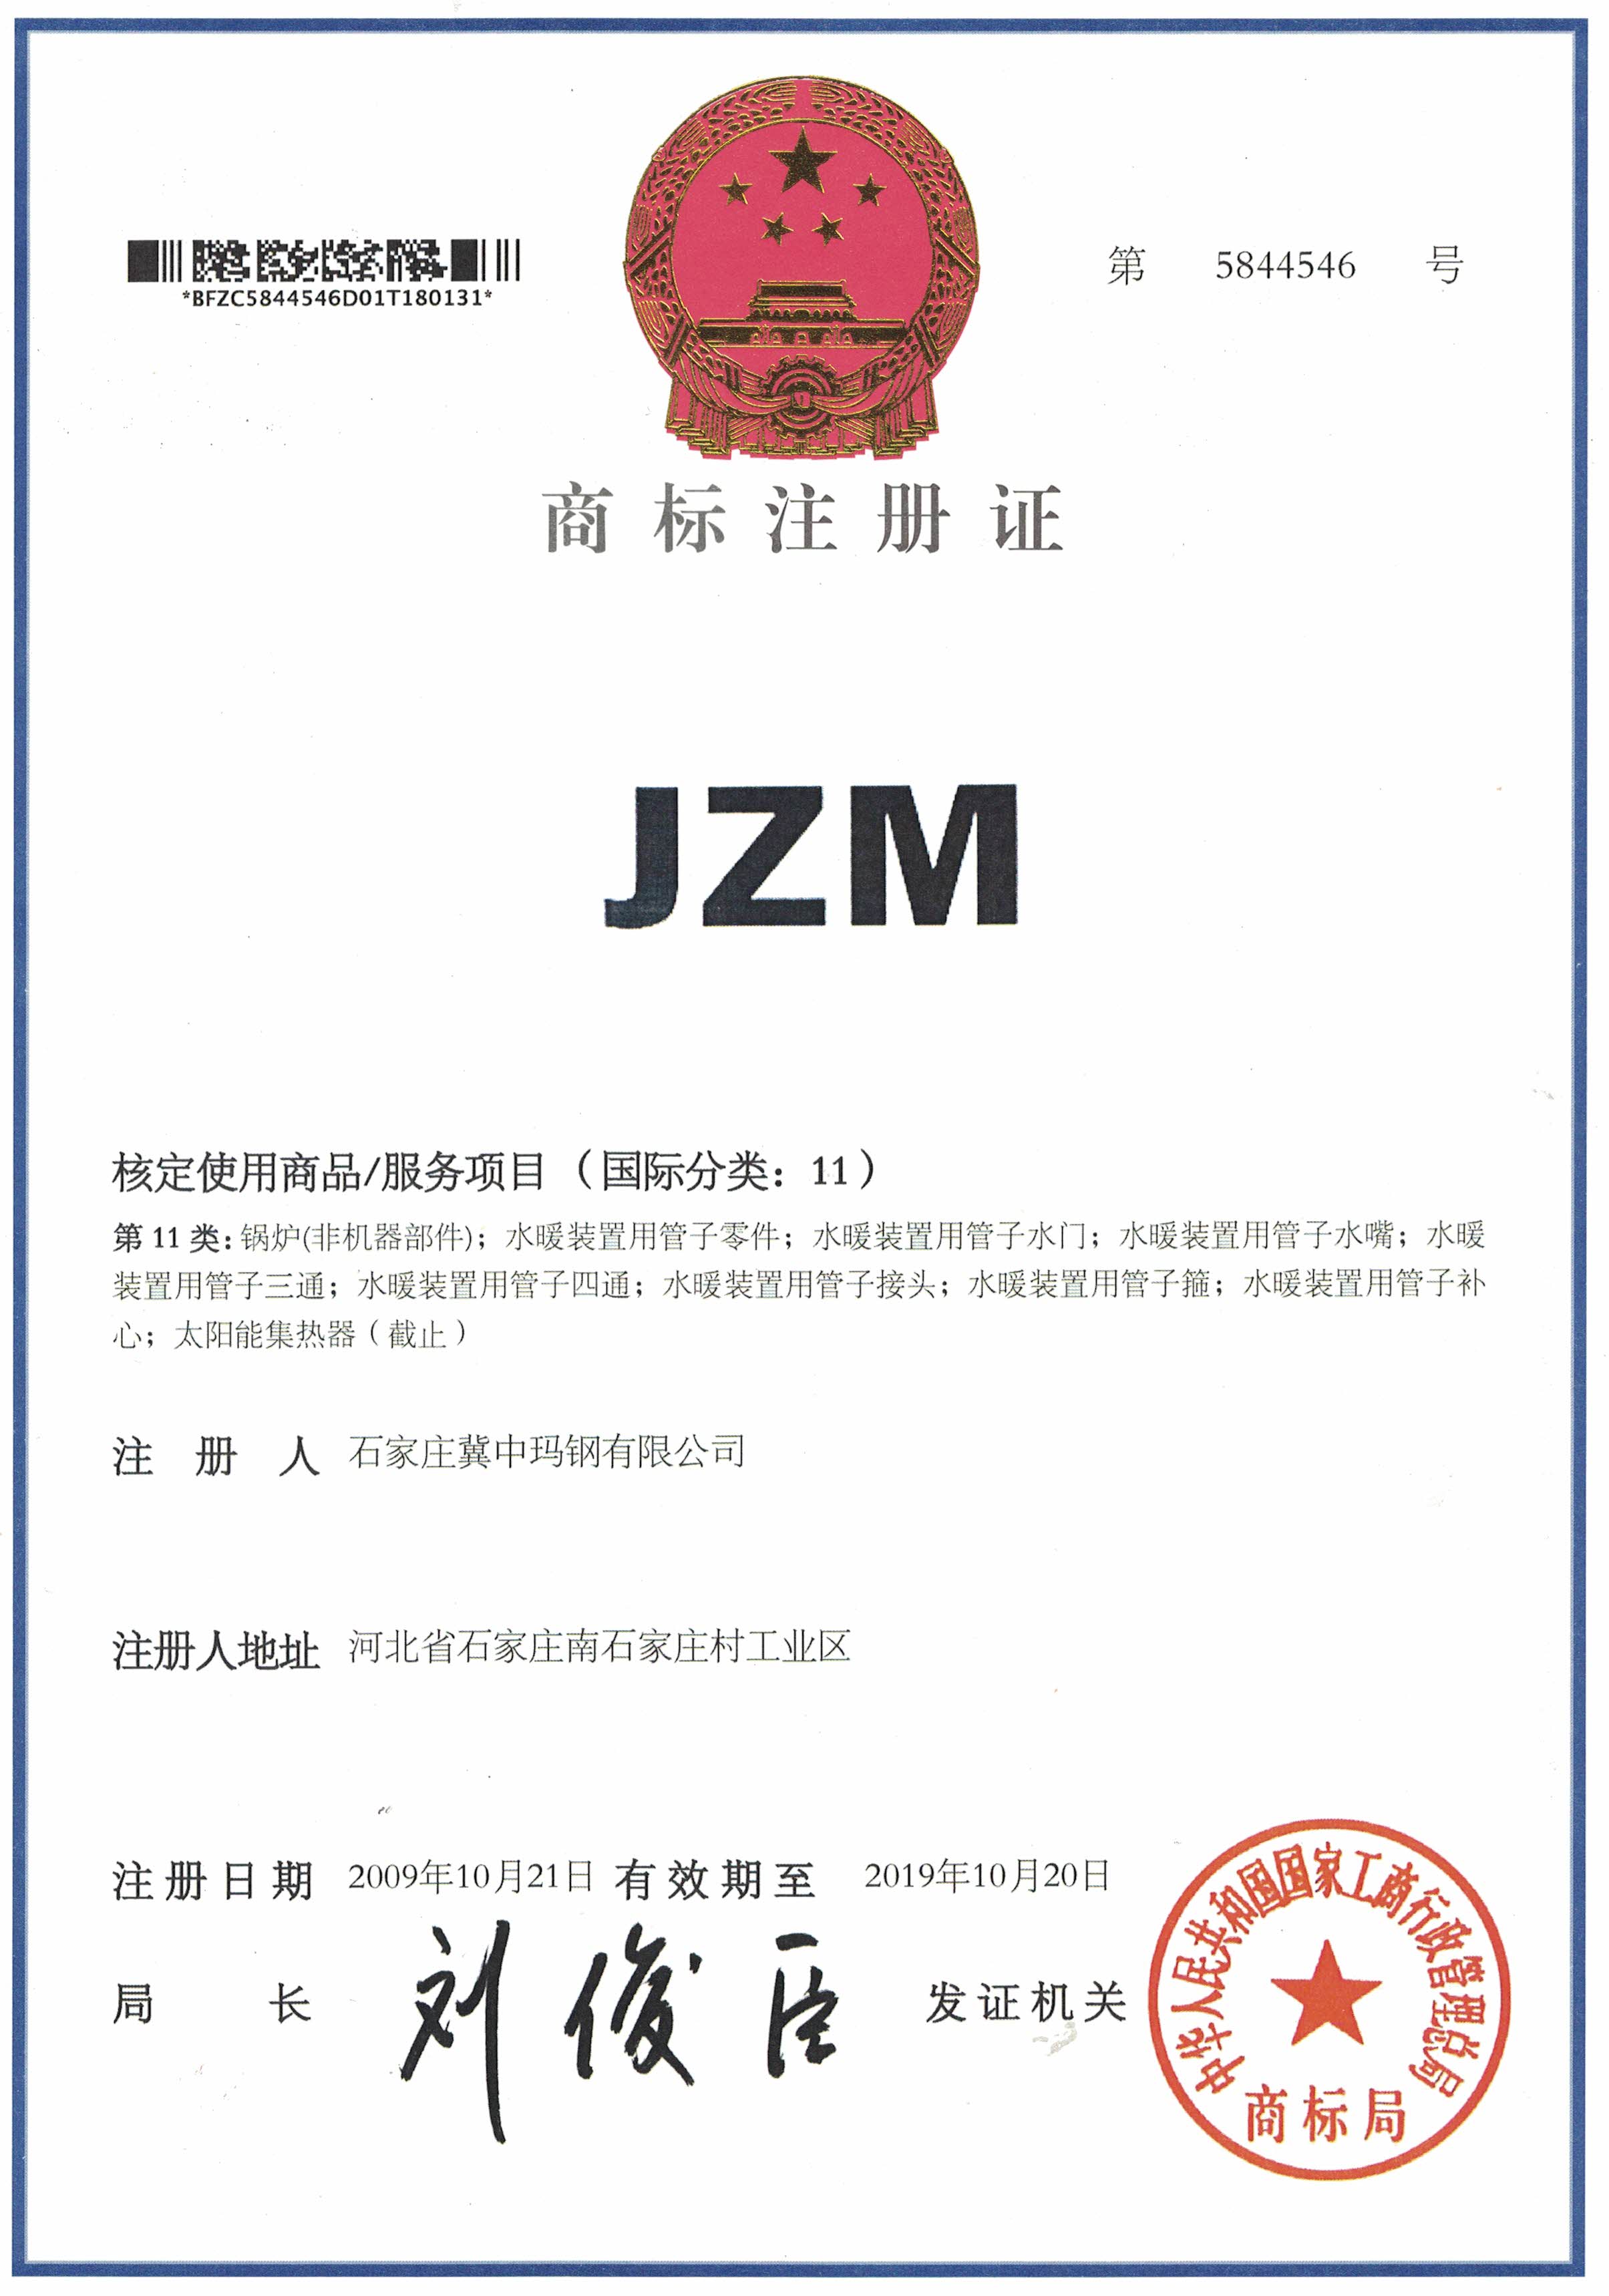 сертификат товарного знака